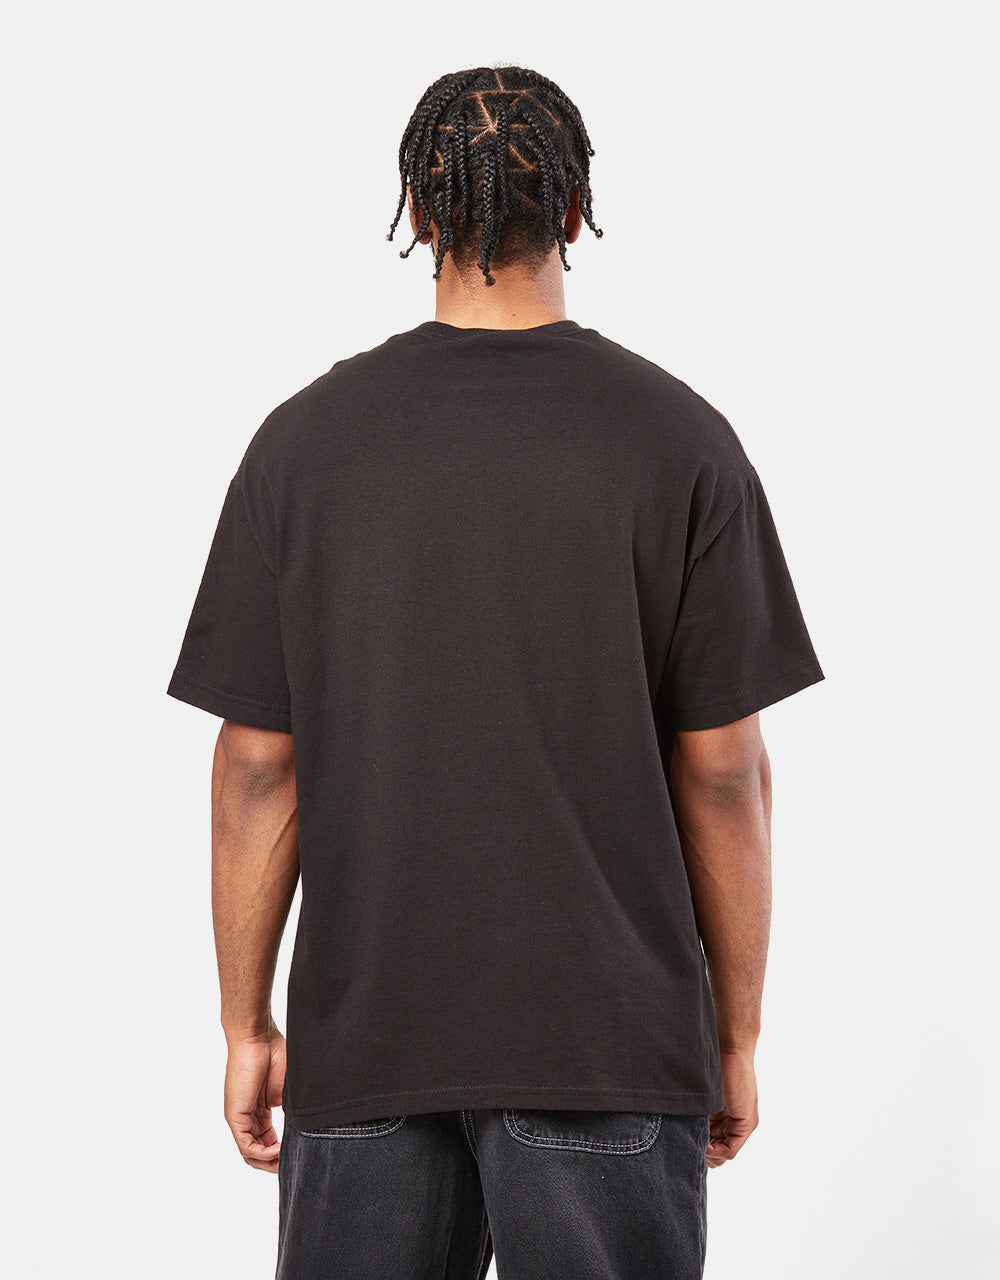 Quasi Pax T-Shirt - Black